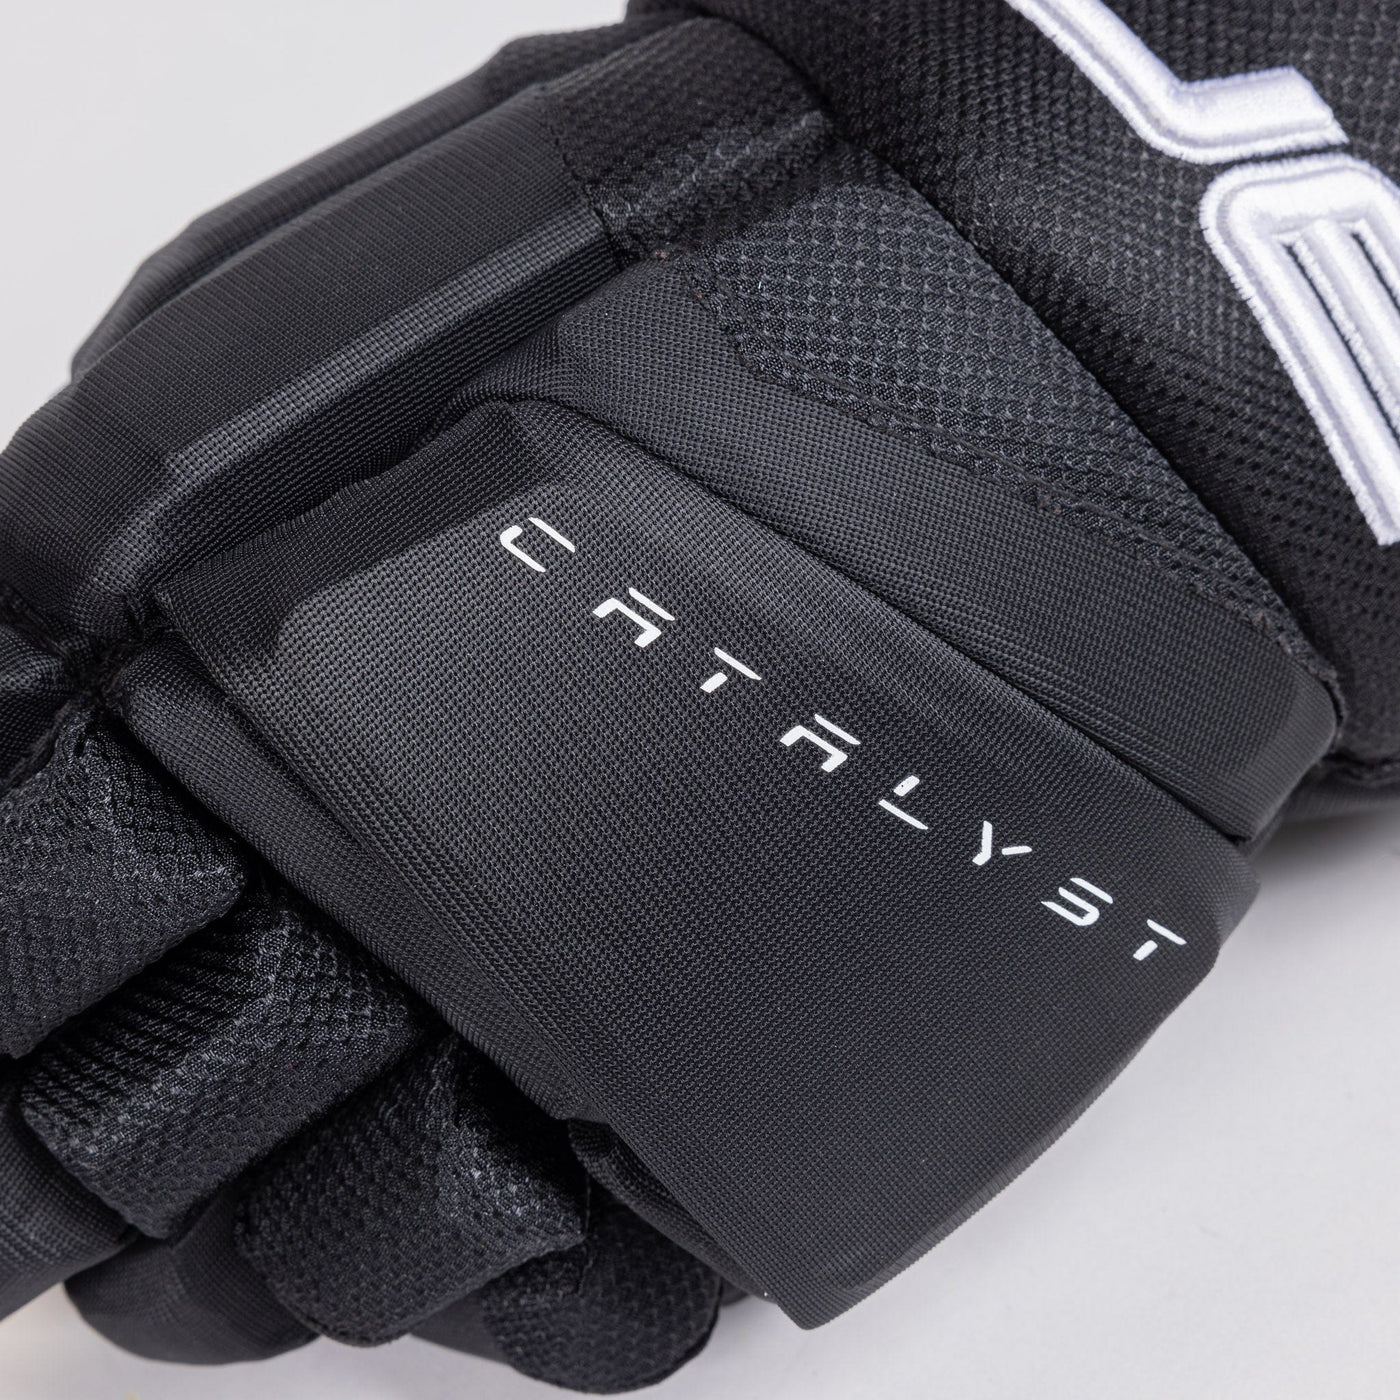 TRUE Catalyst Pro Stock Senior Hockey Glove - Columbus Blue Jackets - The Hockey Shop Source For Sports